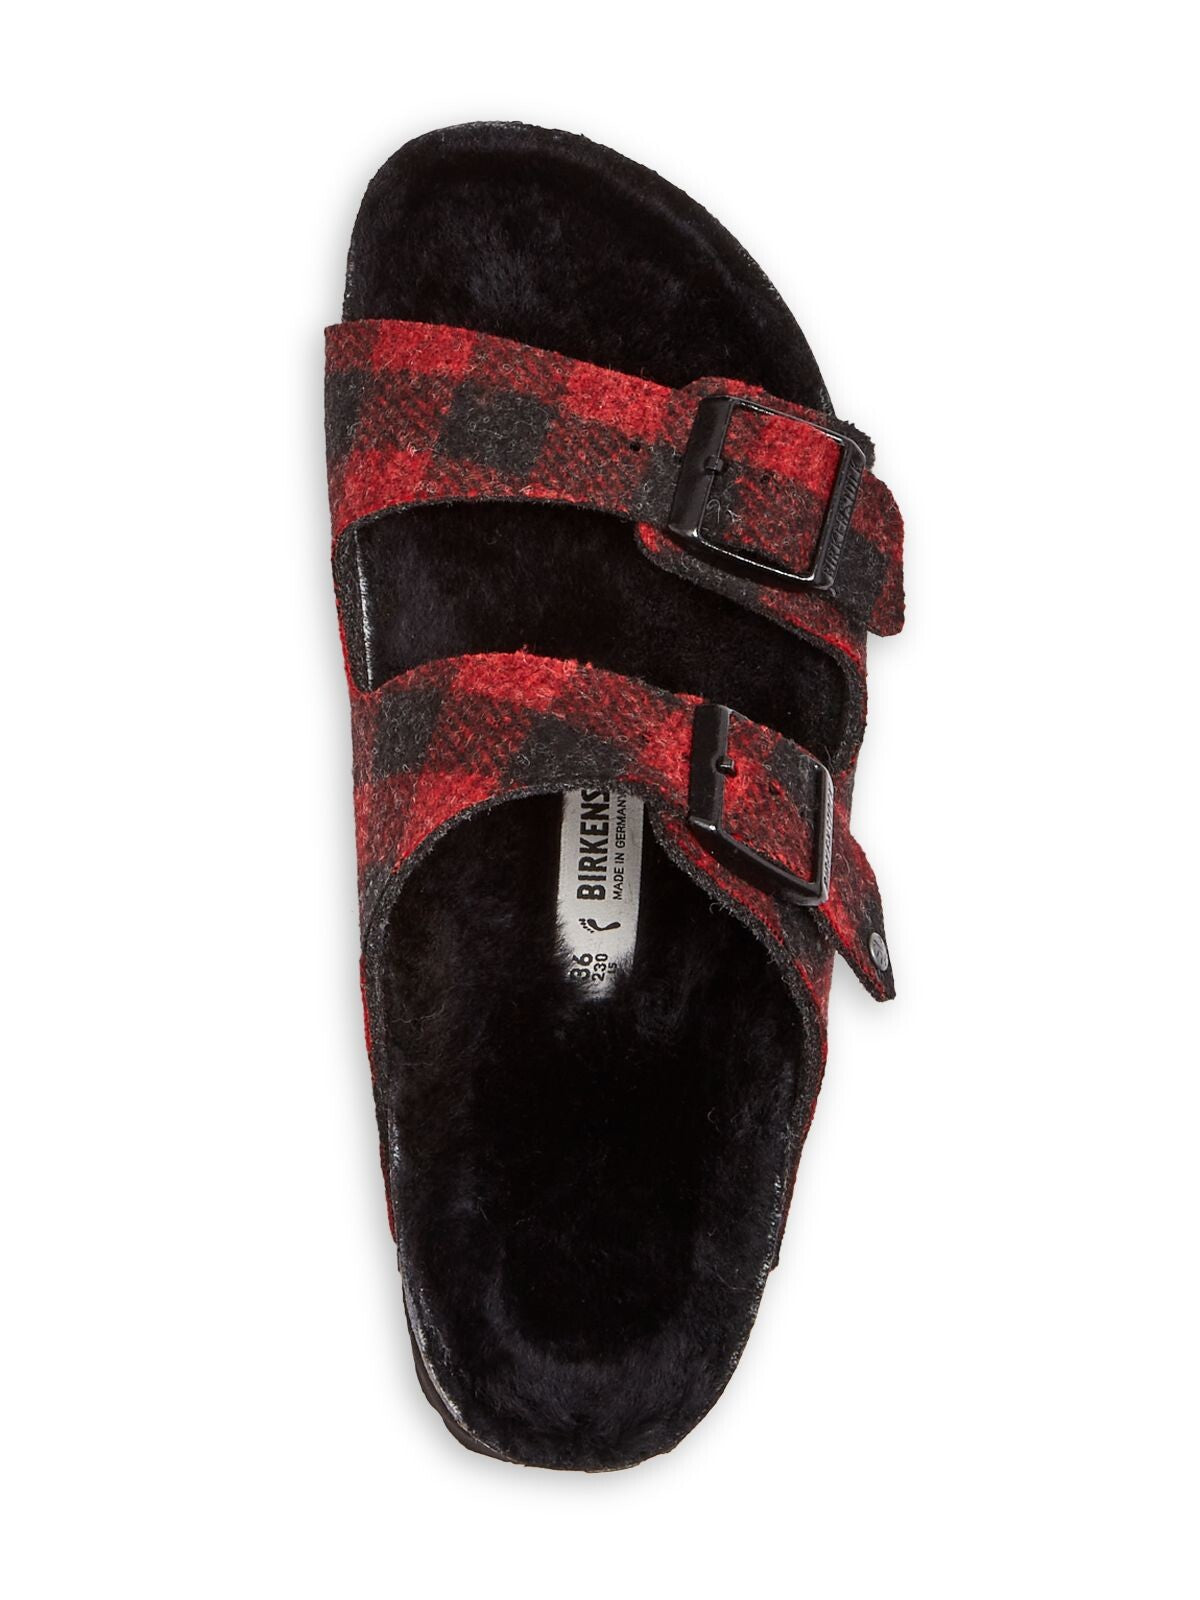 BIRKENSTOCK Womens Red Plaid Contoured Footbed Buckle Accent Comfort Arizona Round Toe Platform Slip On Sandals Shoes